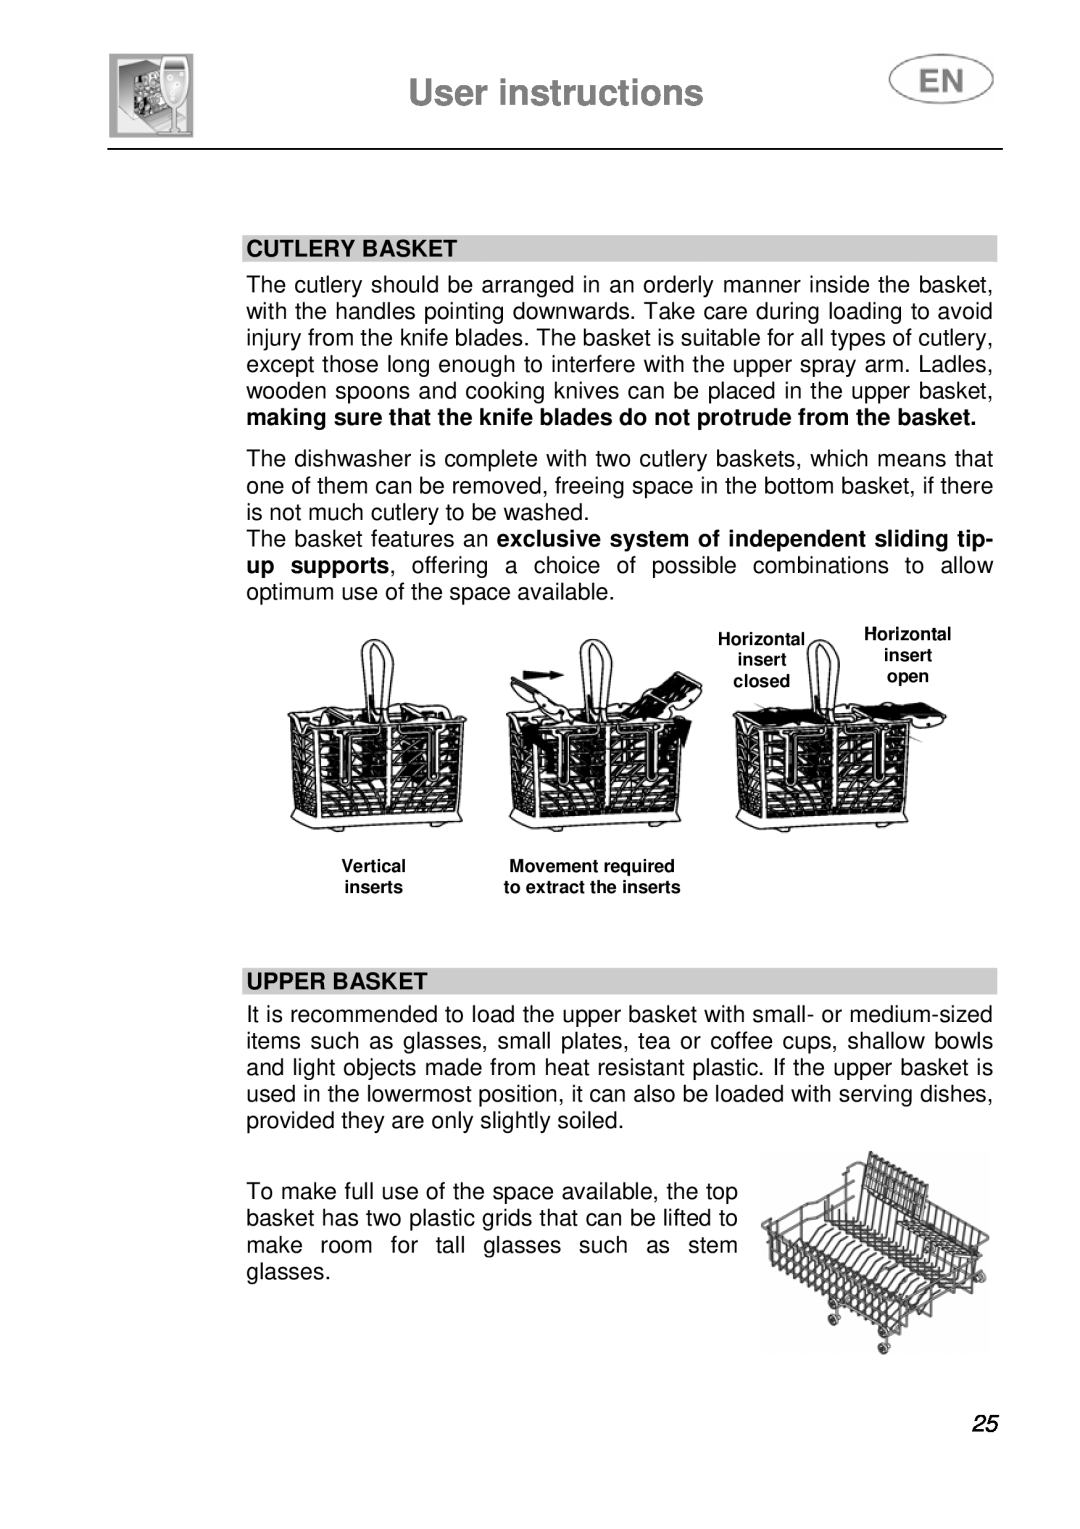 Smeg DI612A1 instruction manual User instructions, Cutlery Basket, Upper Basket 